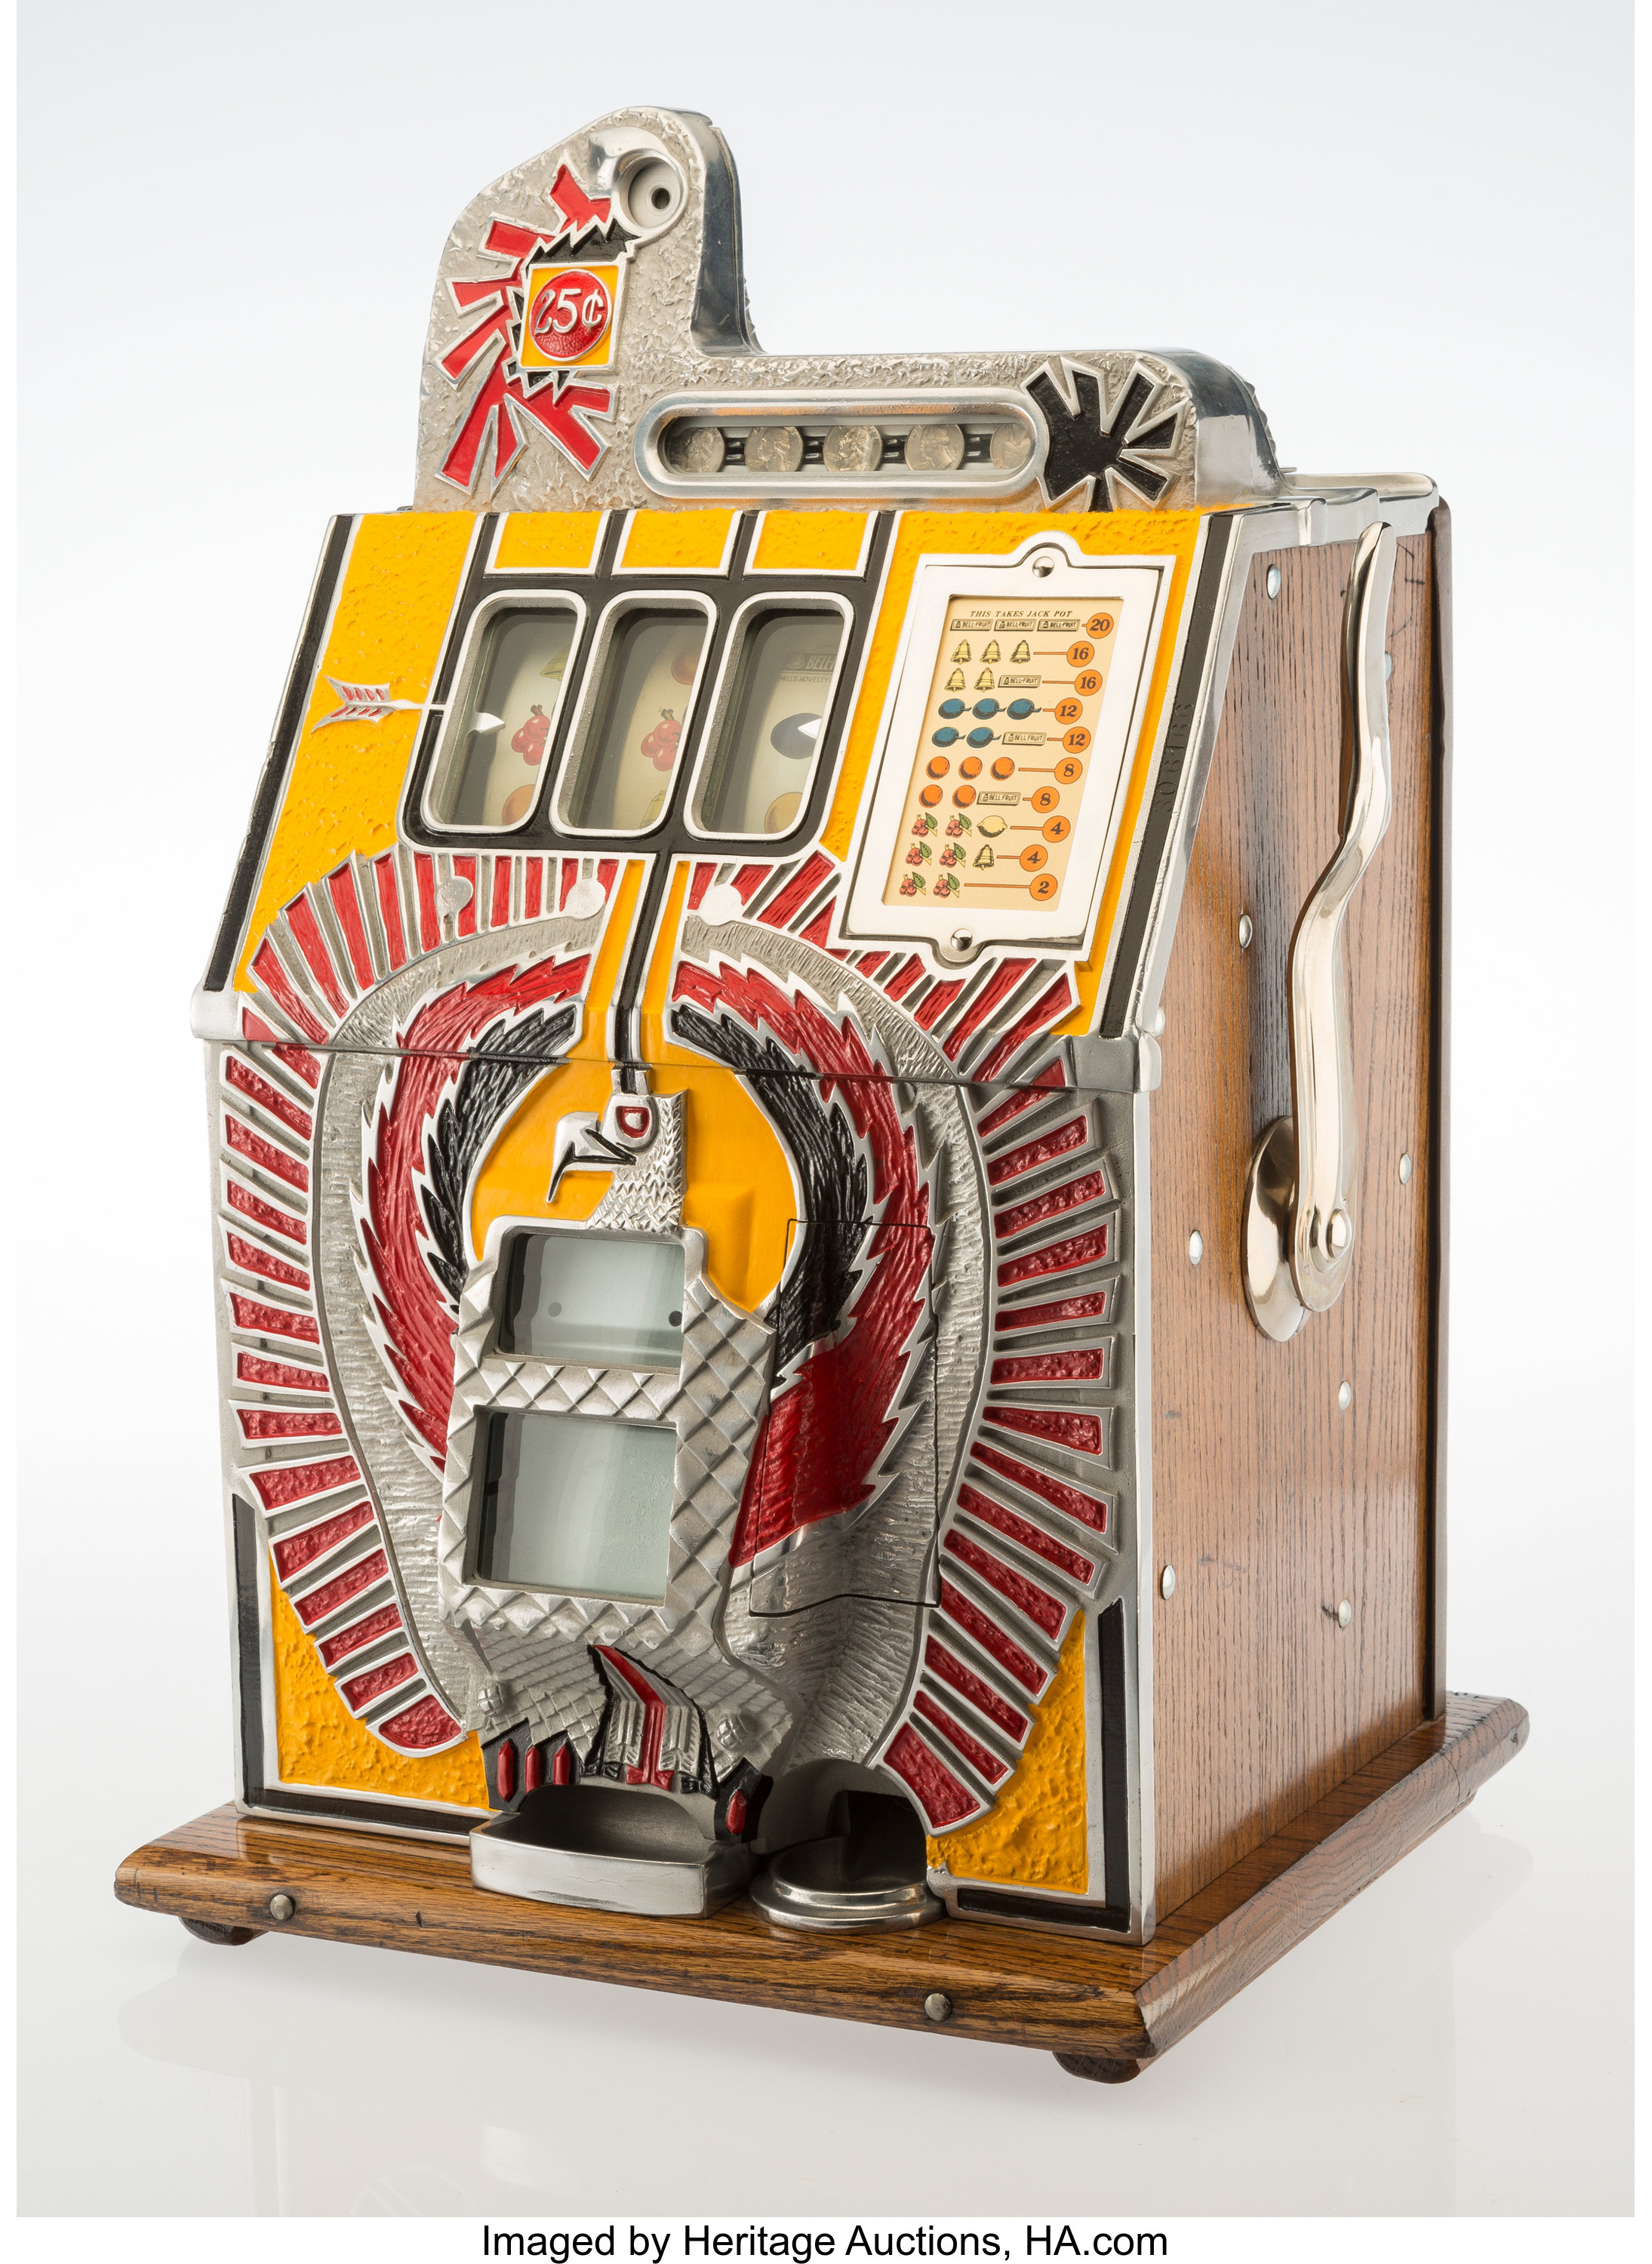 War eagle slot machine for sale